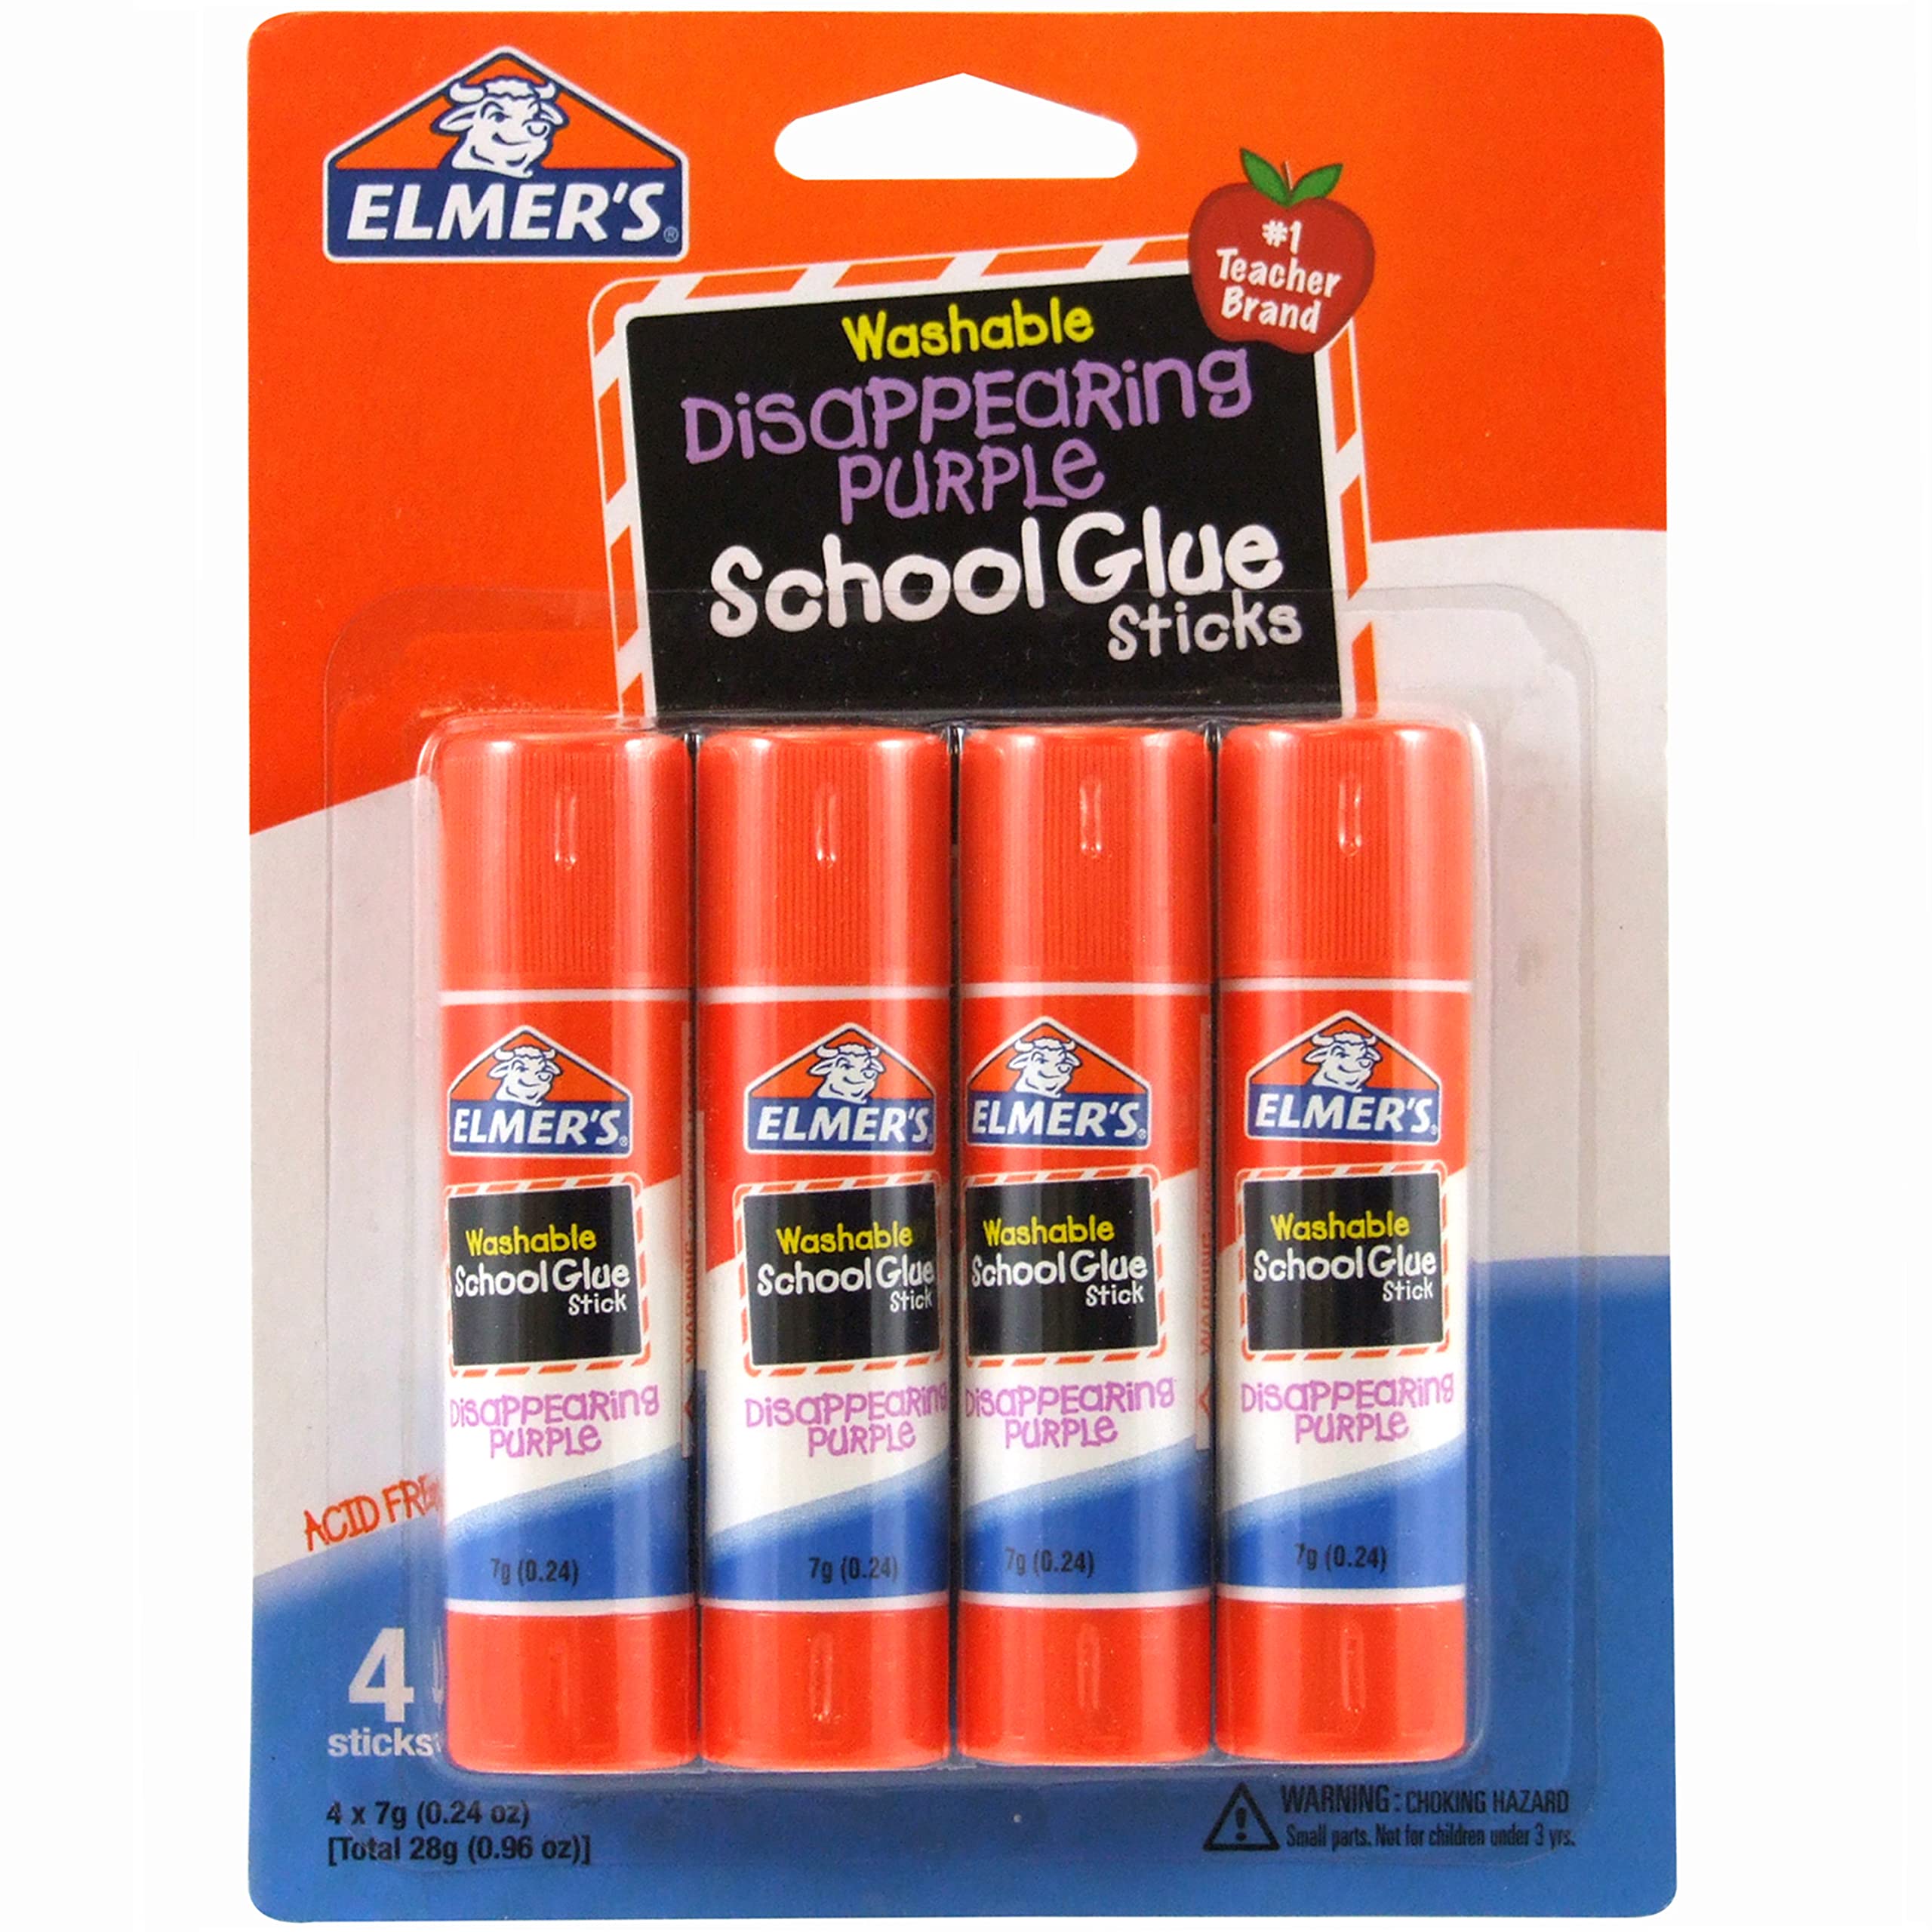 Elmer's Back To School All-Purpose School Glue Sticks